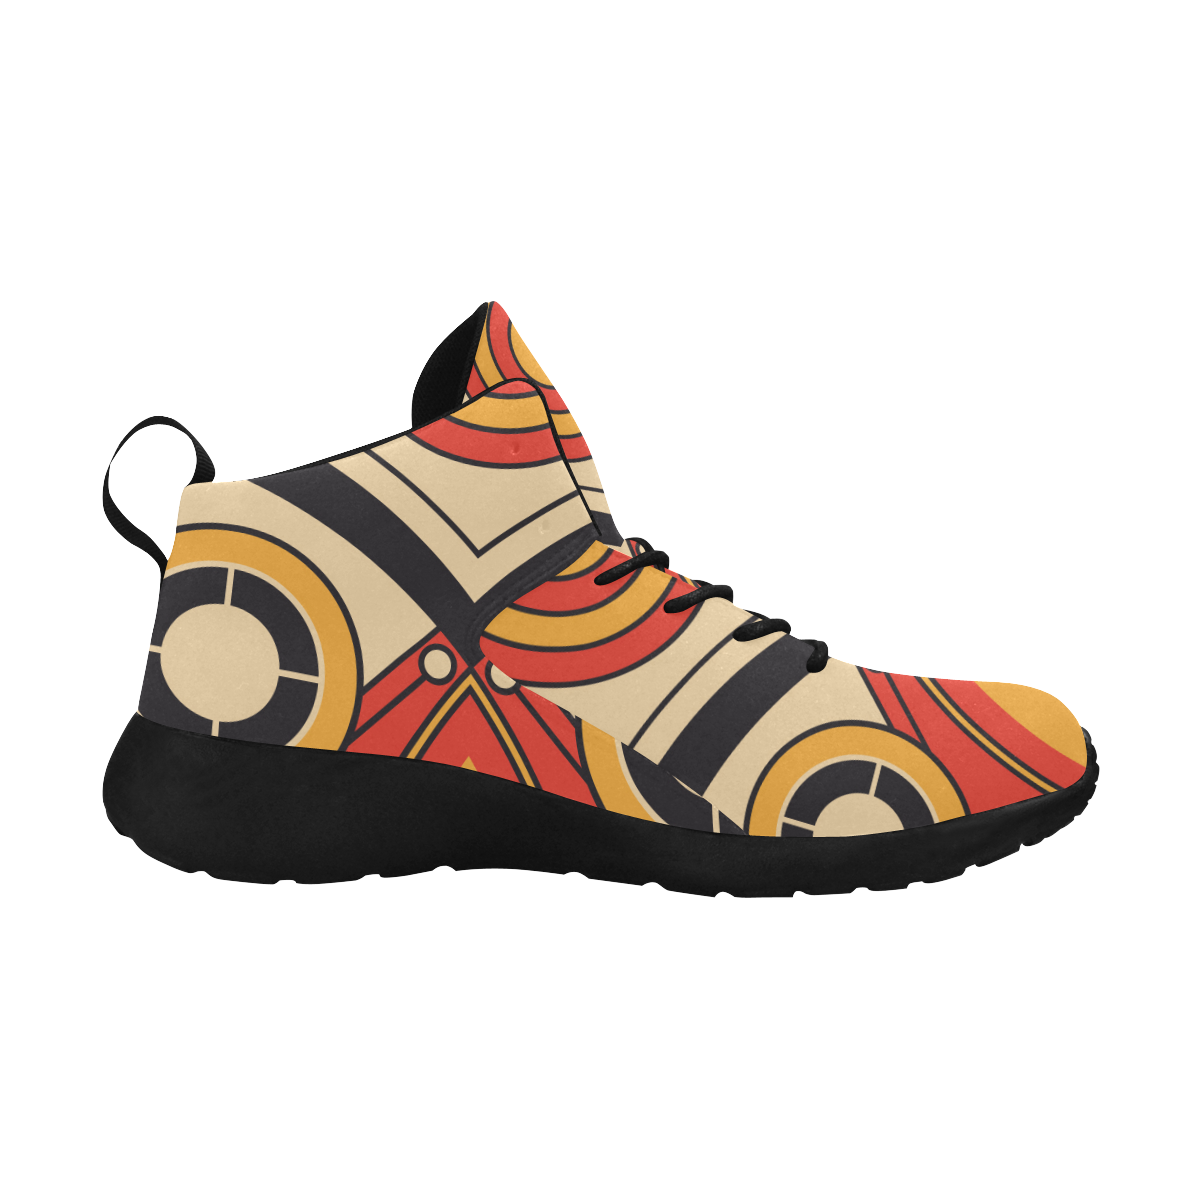 Geo Aztec Bull Tribal Women's Chukka Training Shoes (Model 57502)